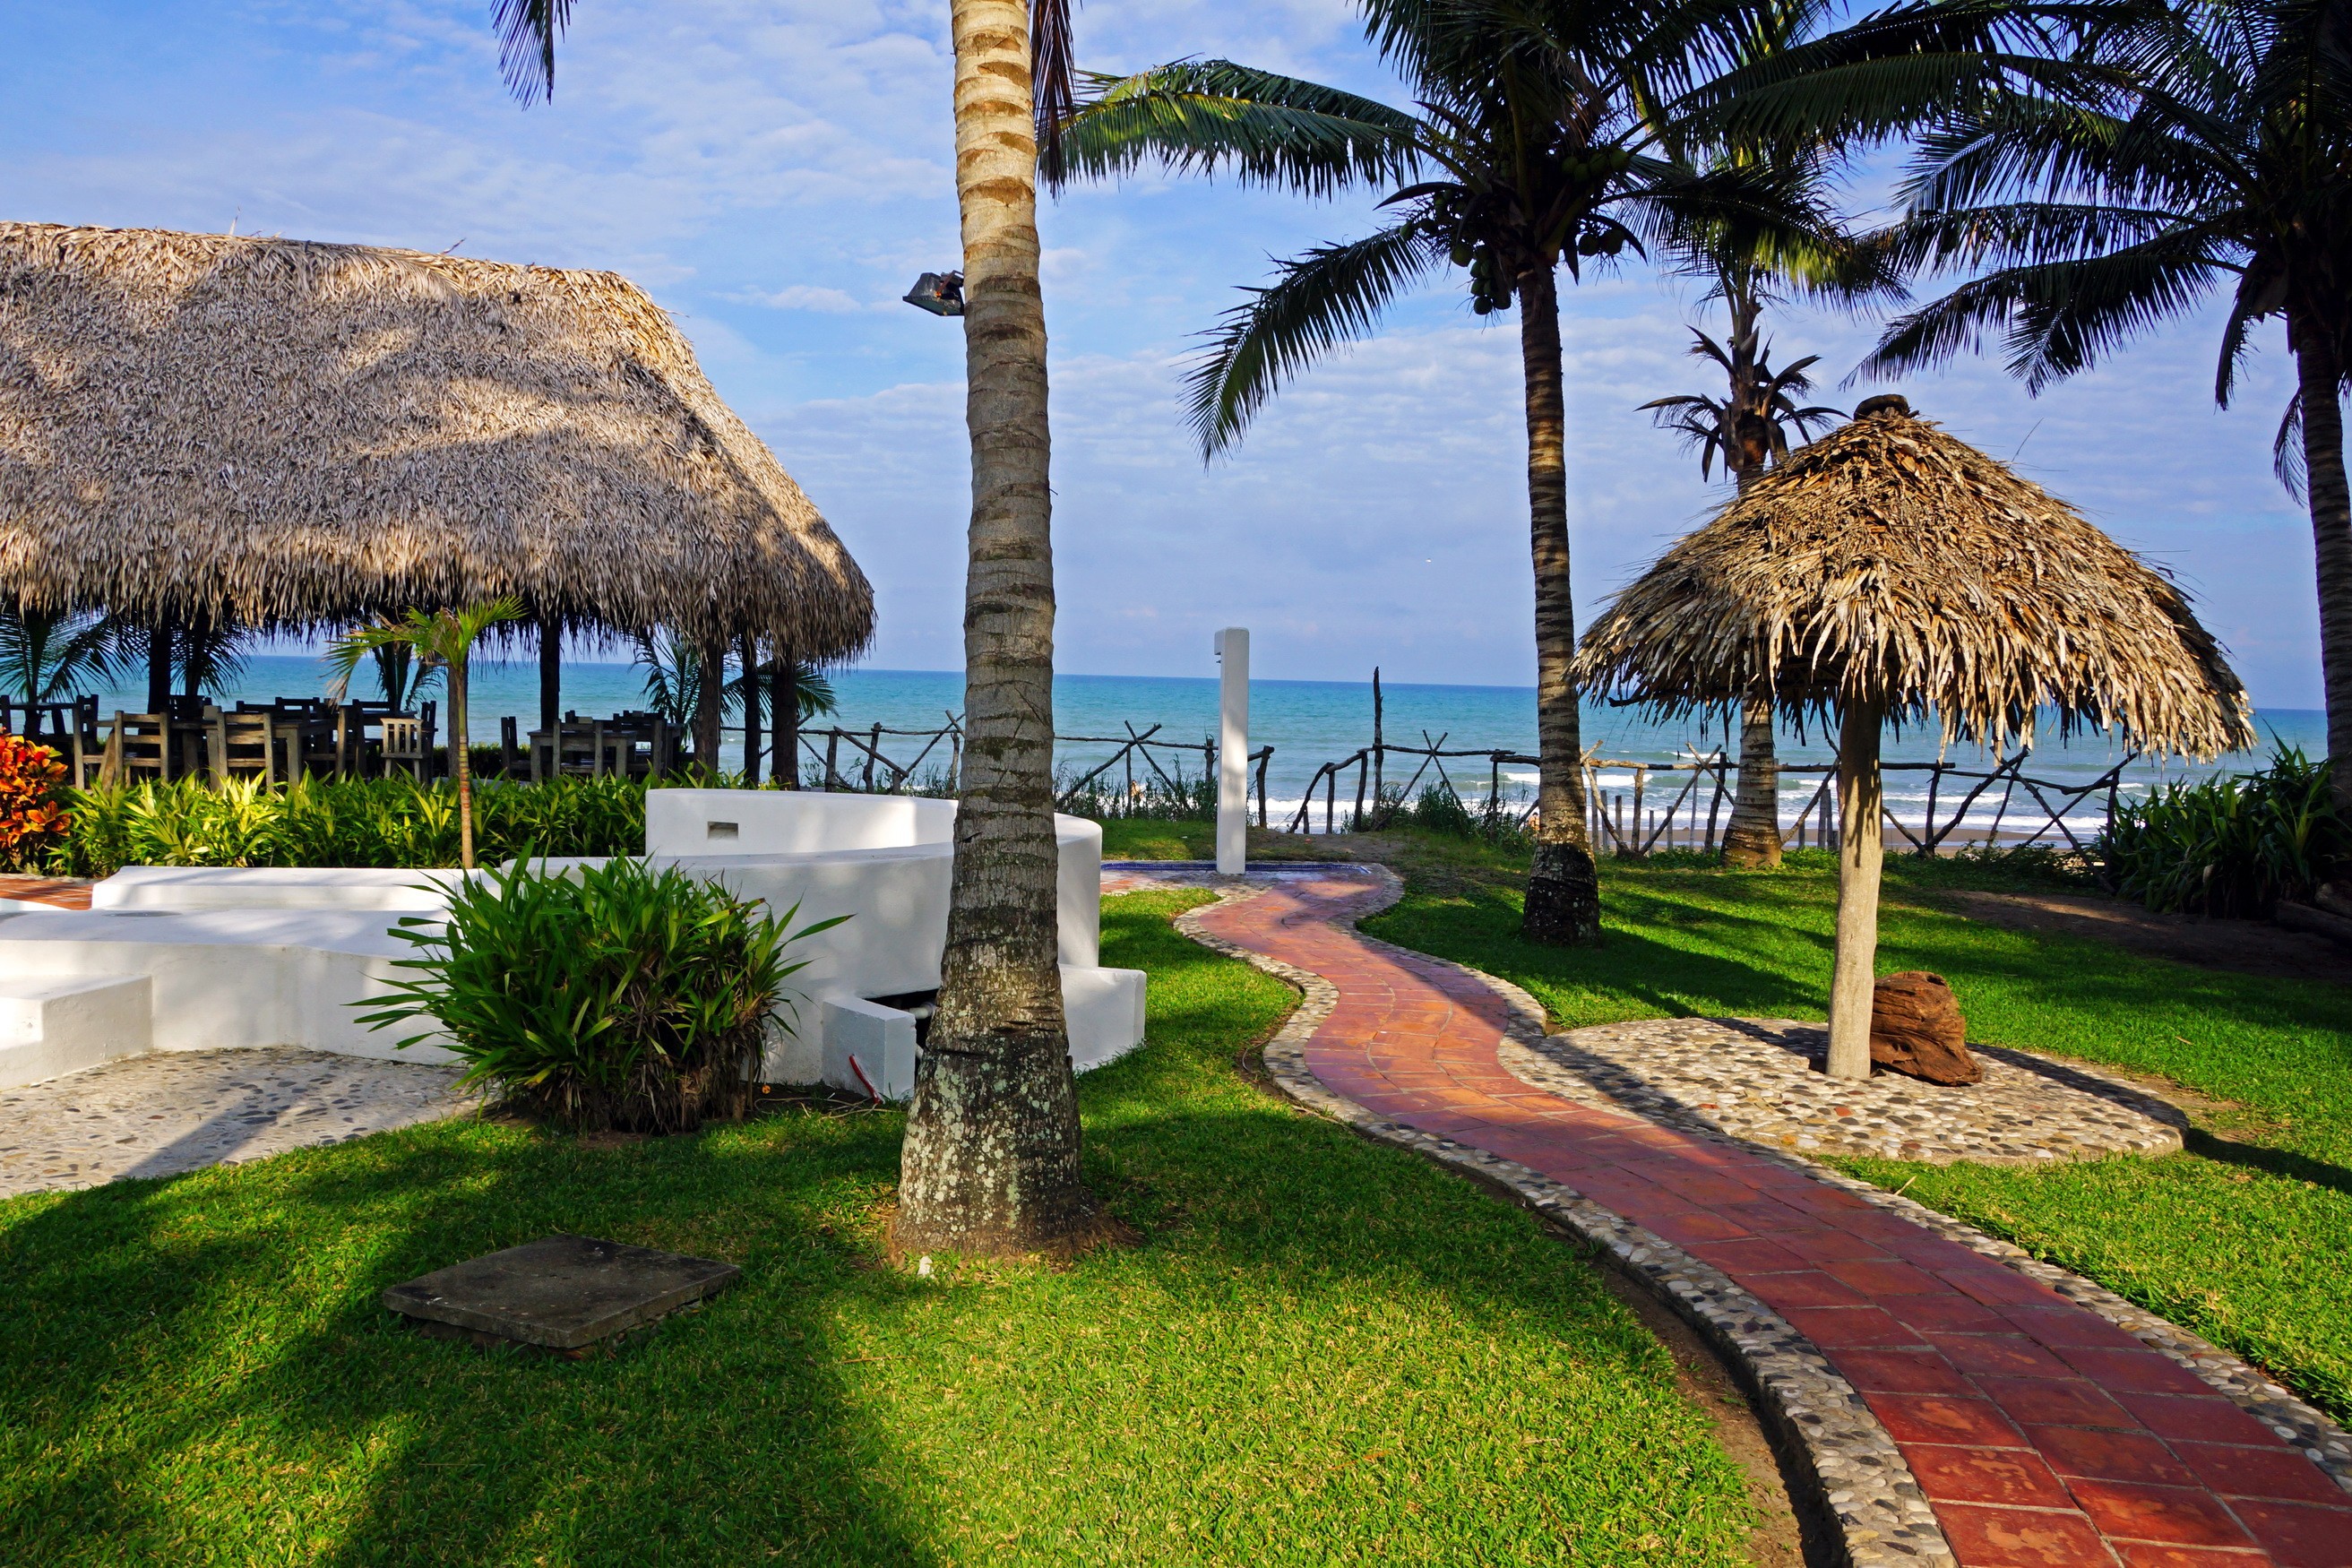 General 2625x1750 island palm trees shoreline resort